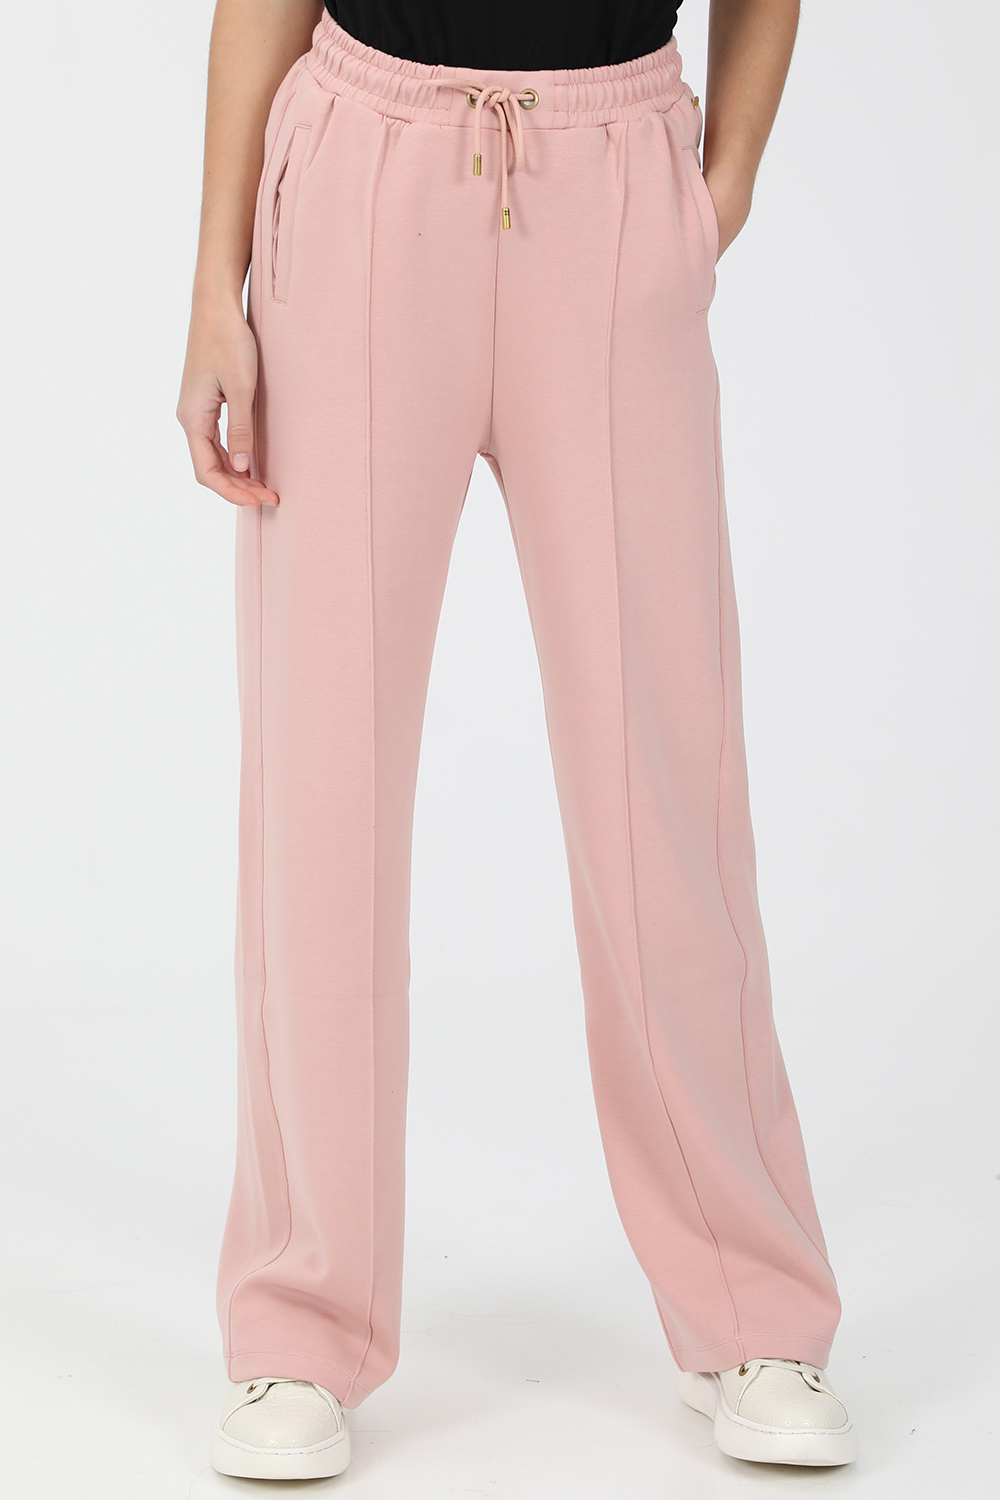 SCOTCH & SODA – Γυναικειο παντελονι φορμας SCOTCH & SODA Soft sweat pants ροζ